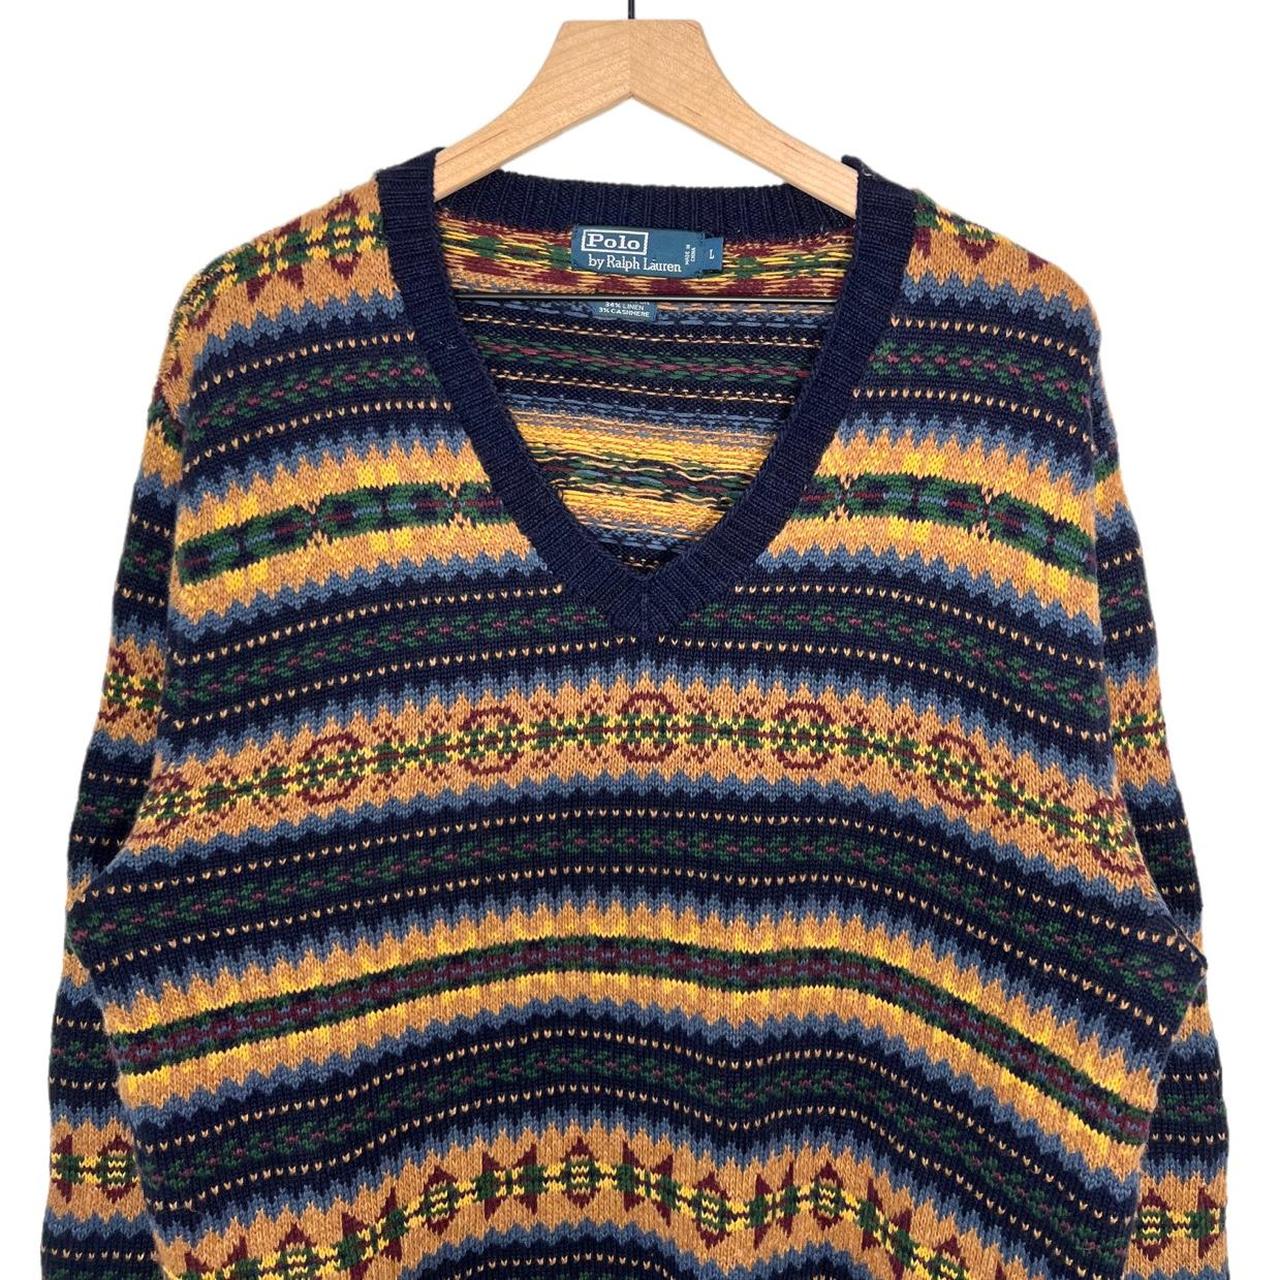 Polo Ralph Lauren Aztec Pattern Vintage 90s Knitted... - Depop